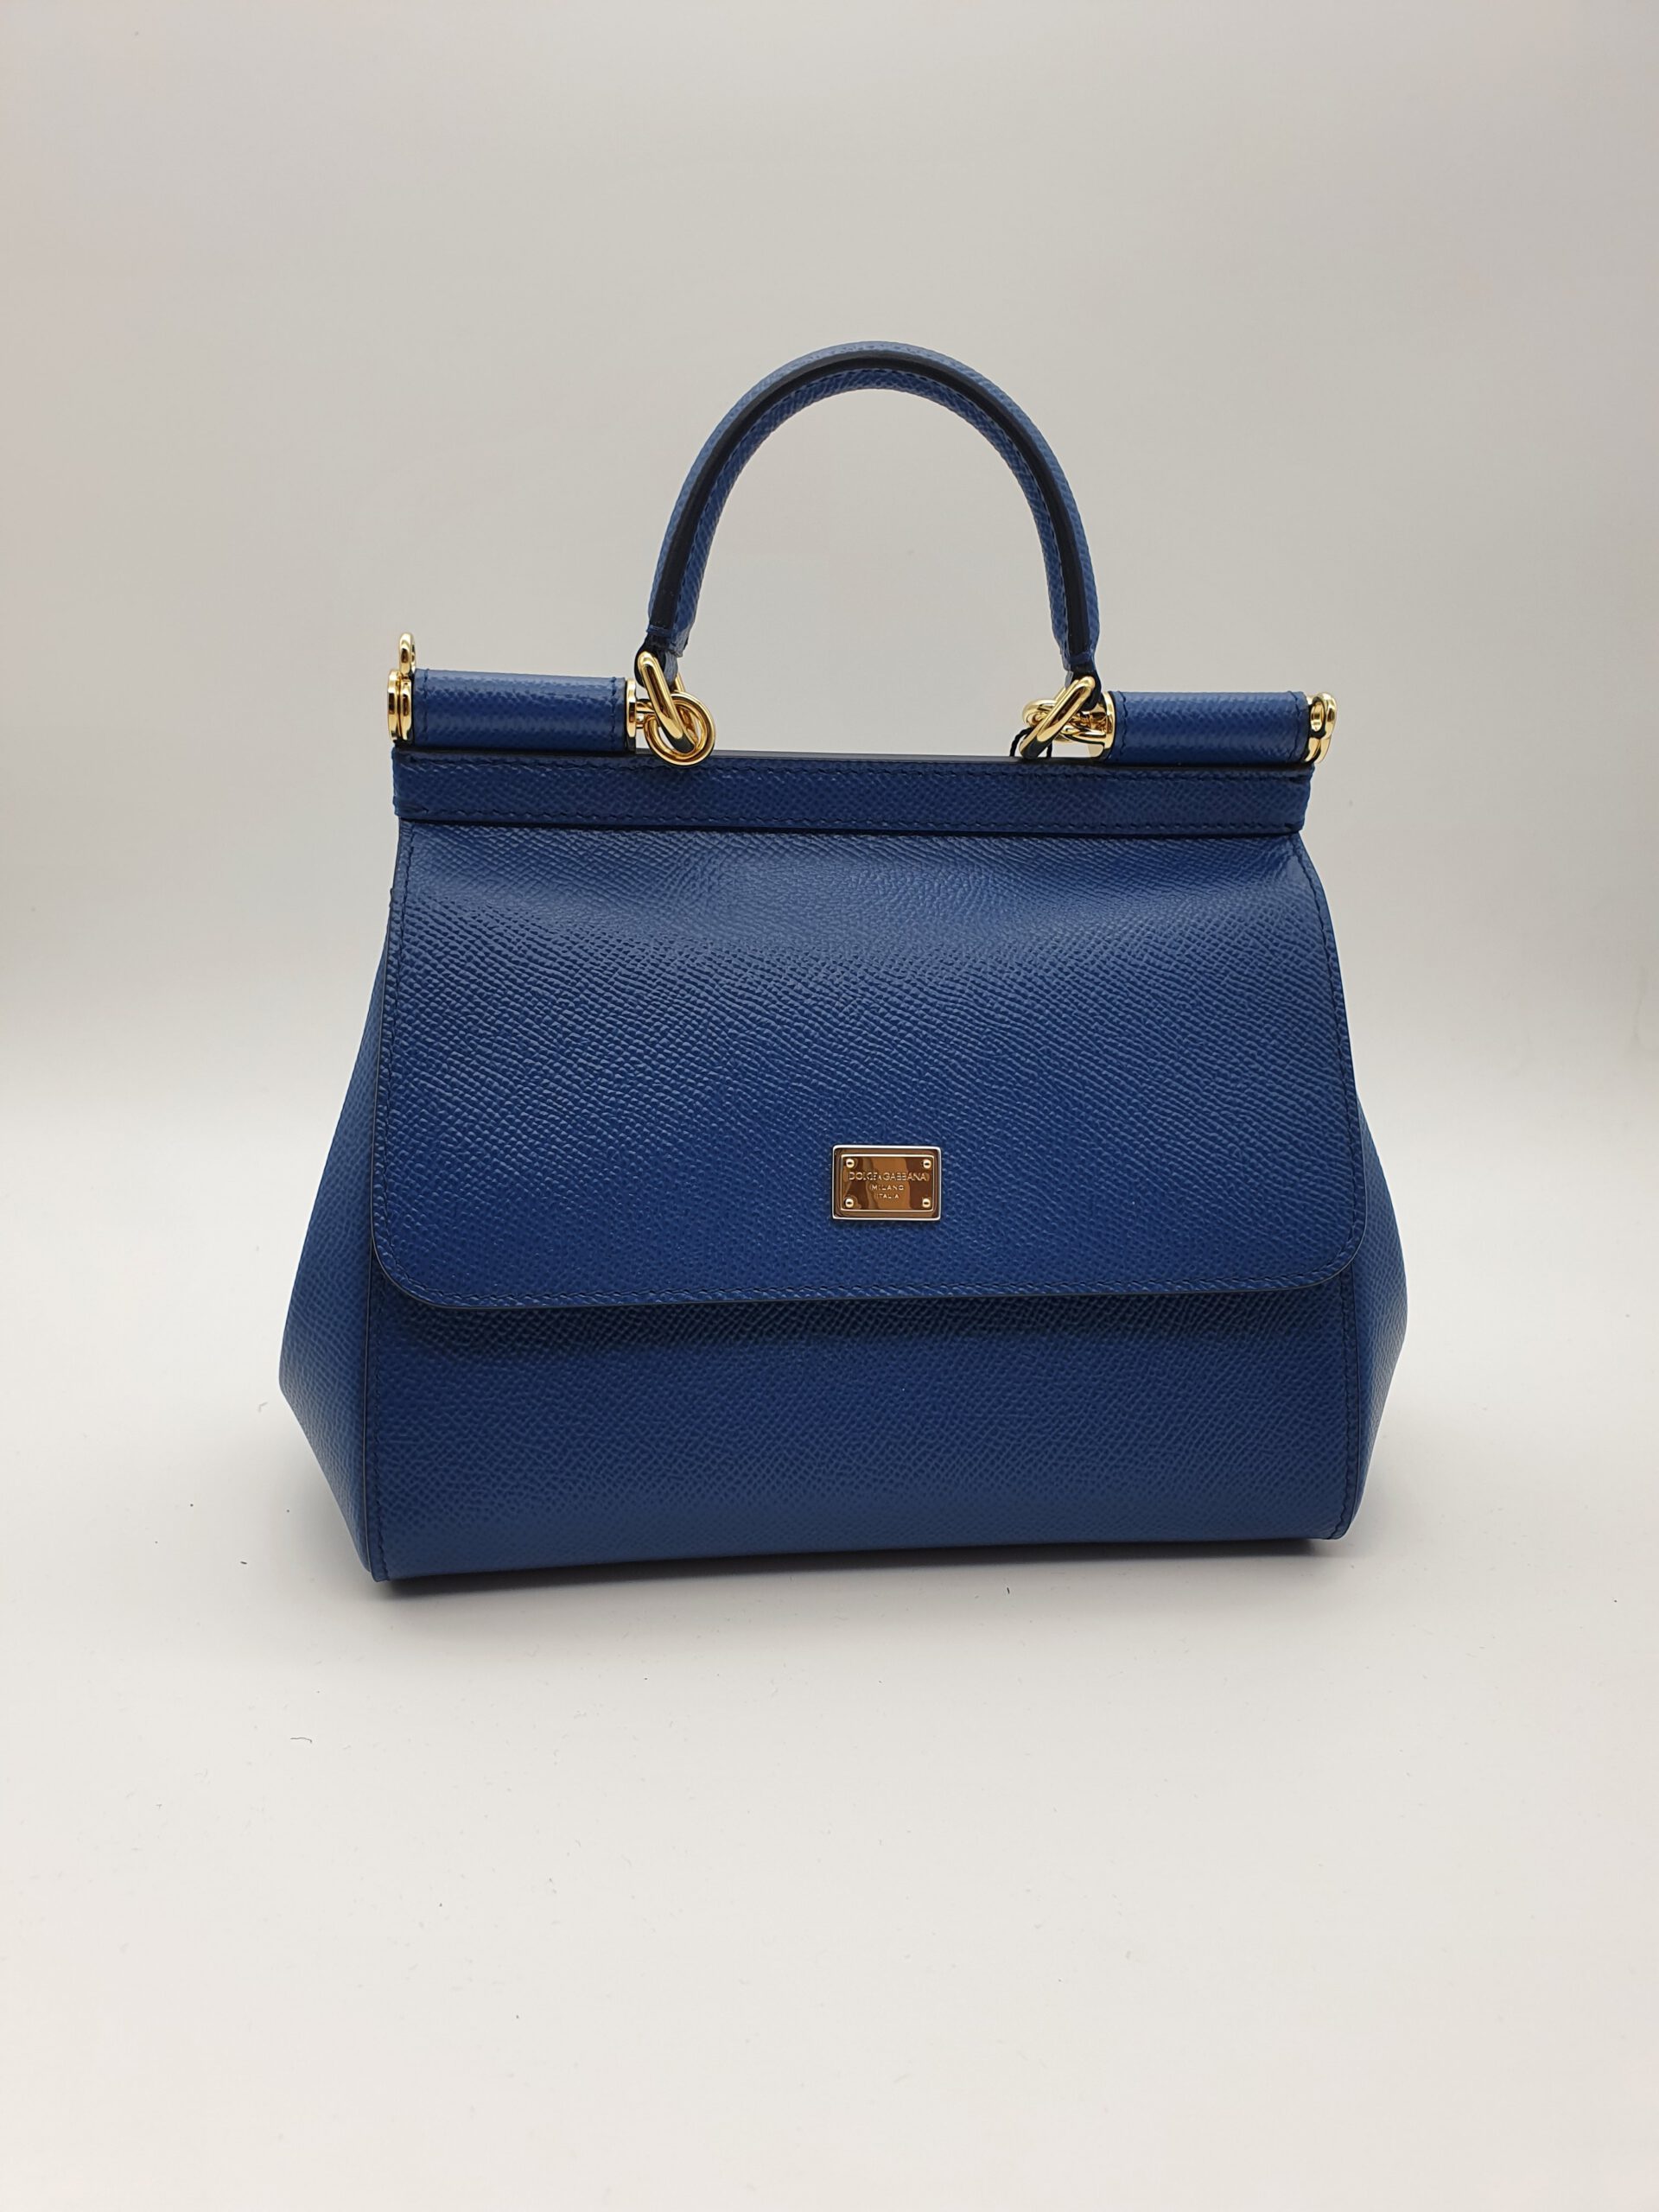 Dolce & Gabbana Small Sicily Handbag